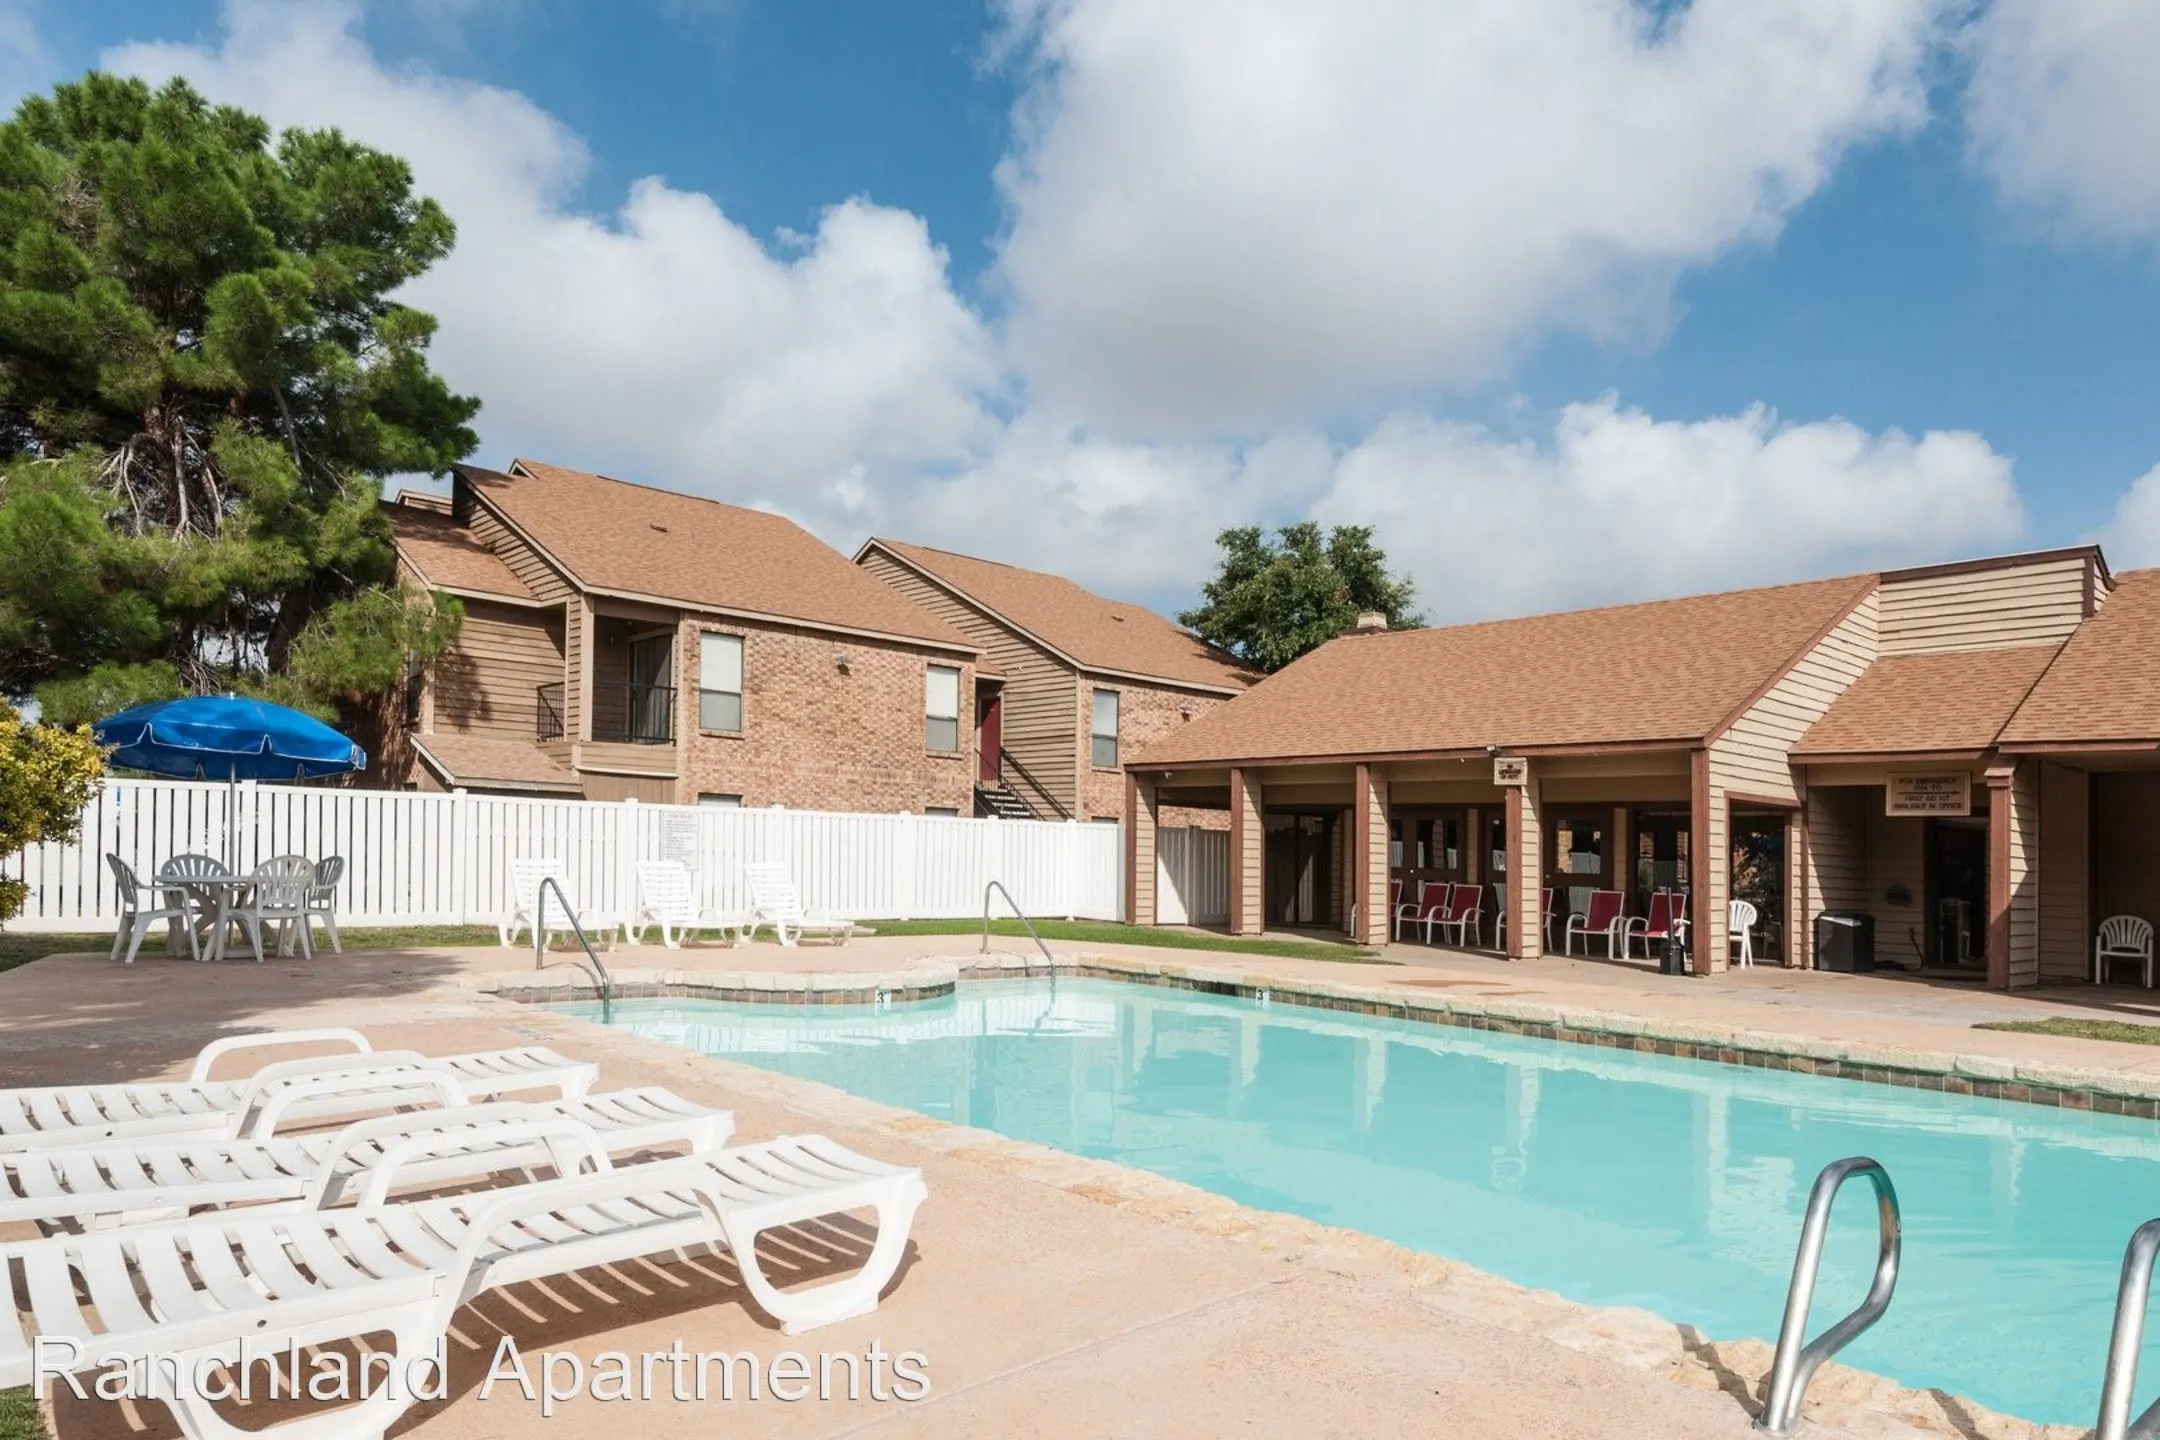 Pool - Ranchland Apartments - Midland, TX